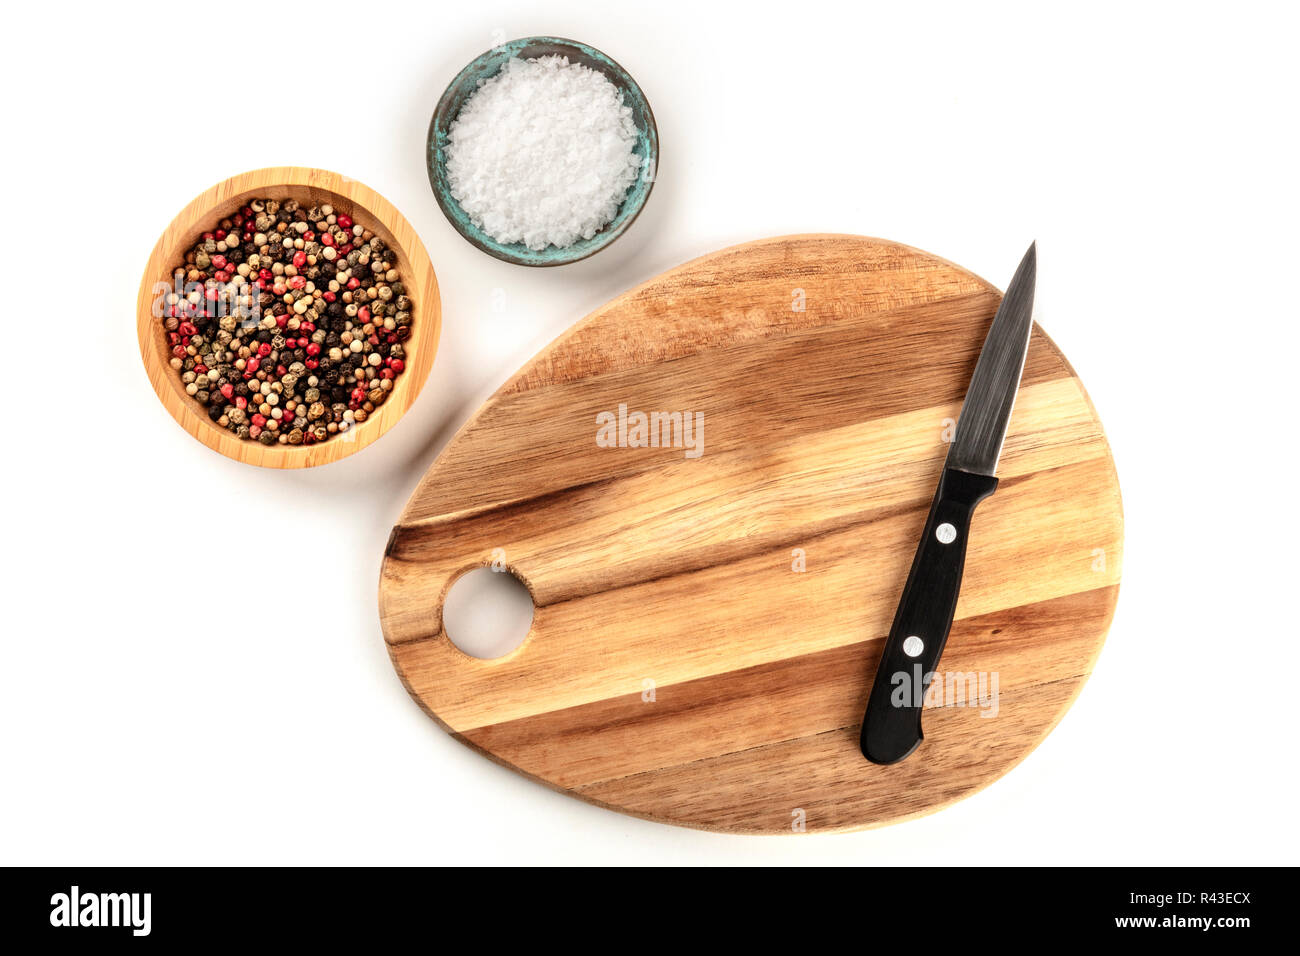 Ruler & Exacto Knife on Cutting Board Stock Photo - Alamy